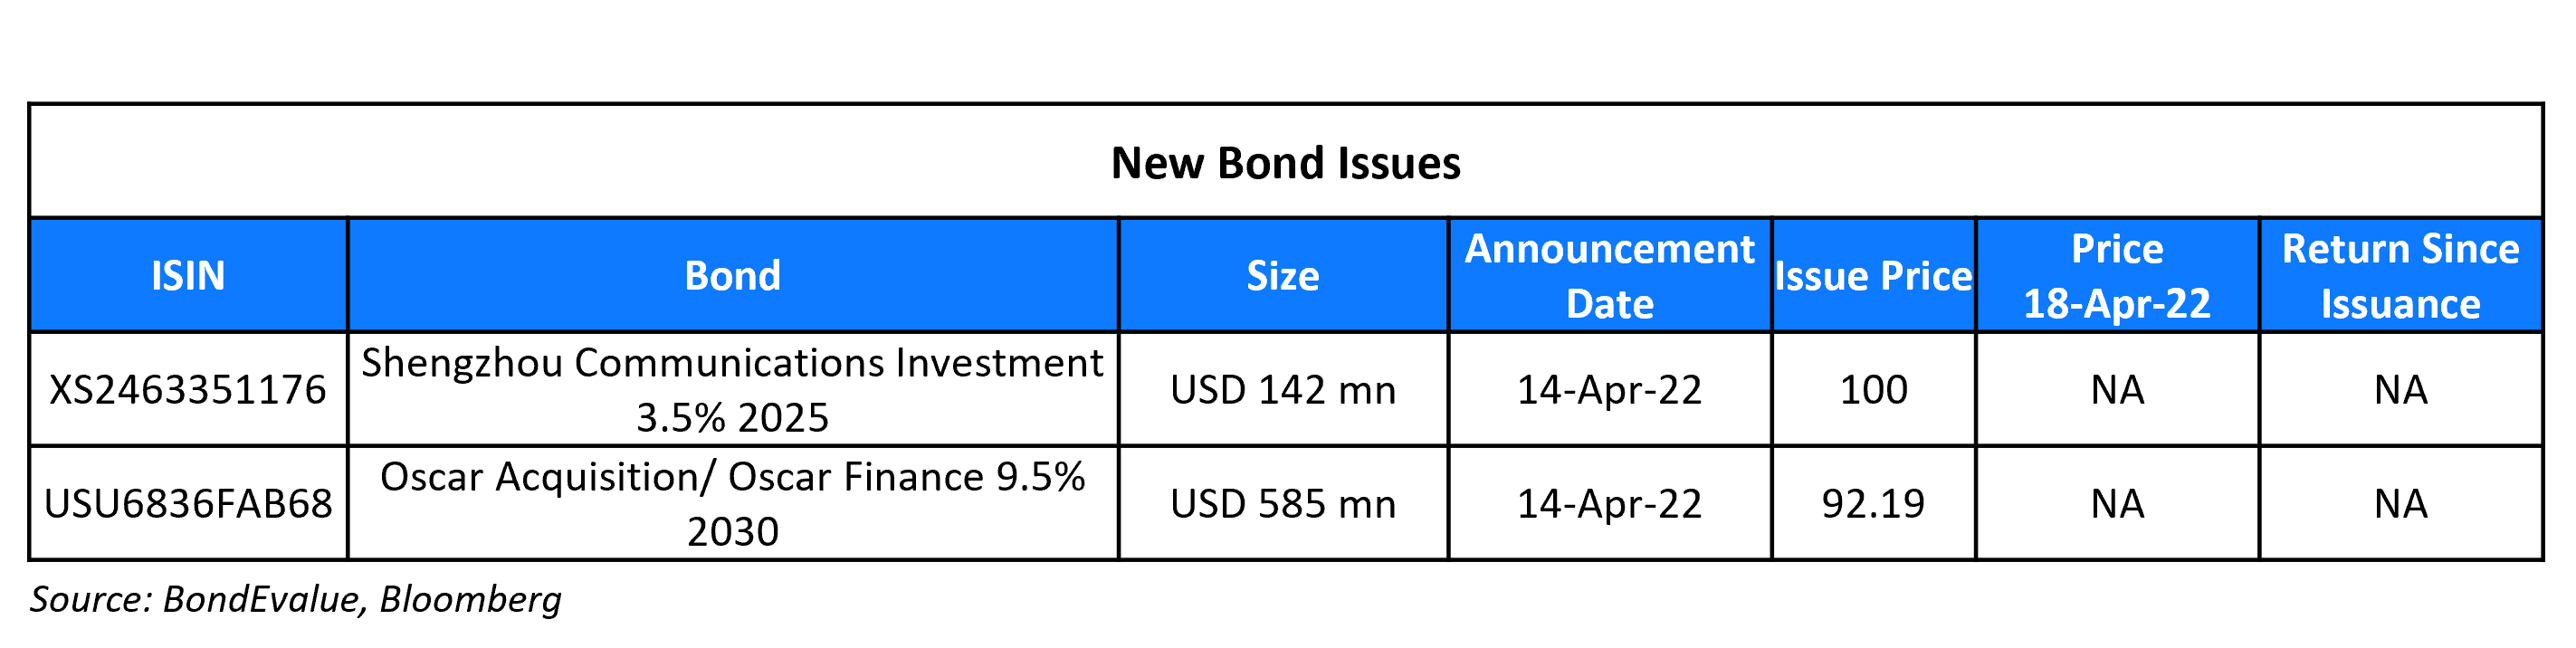 New Bond Issues 18 Apr